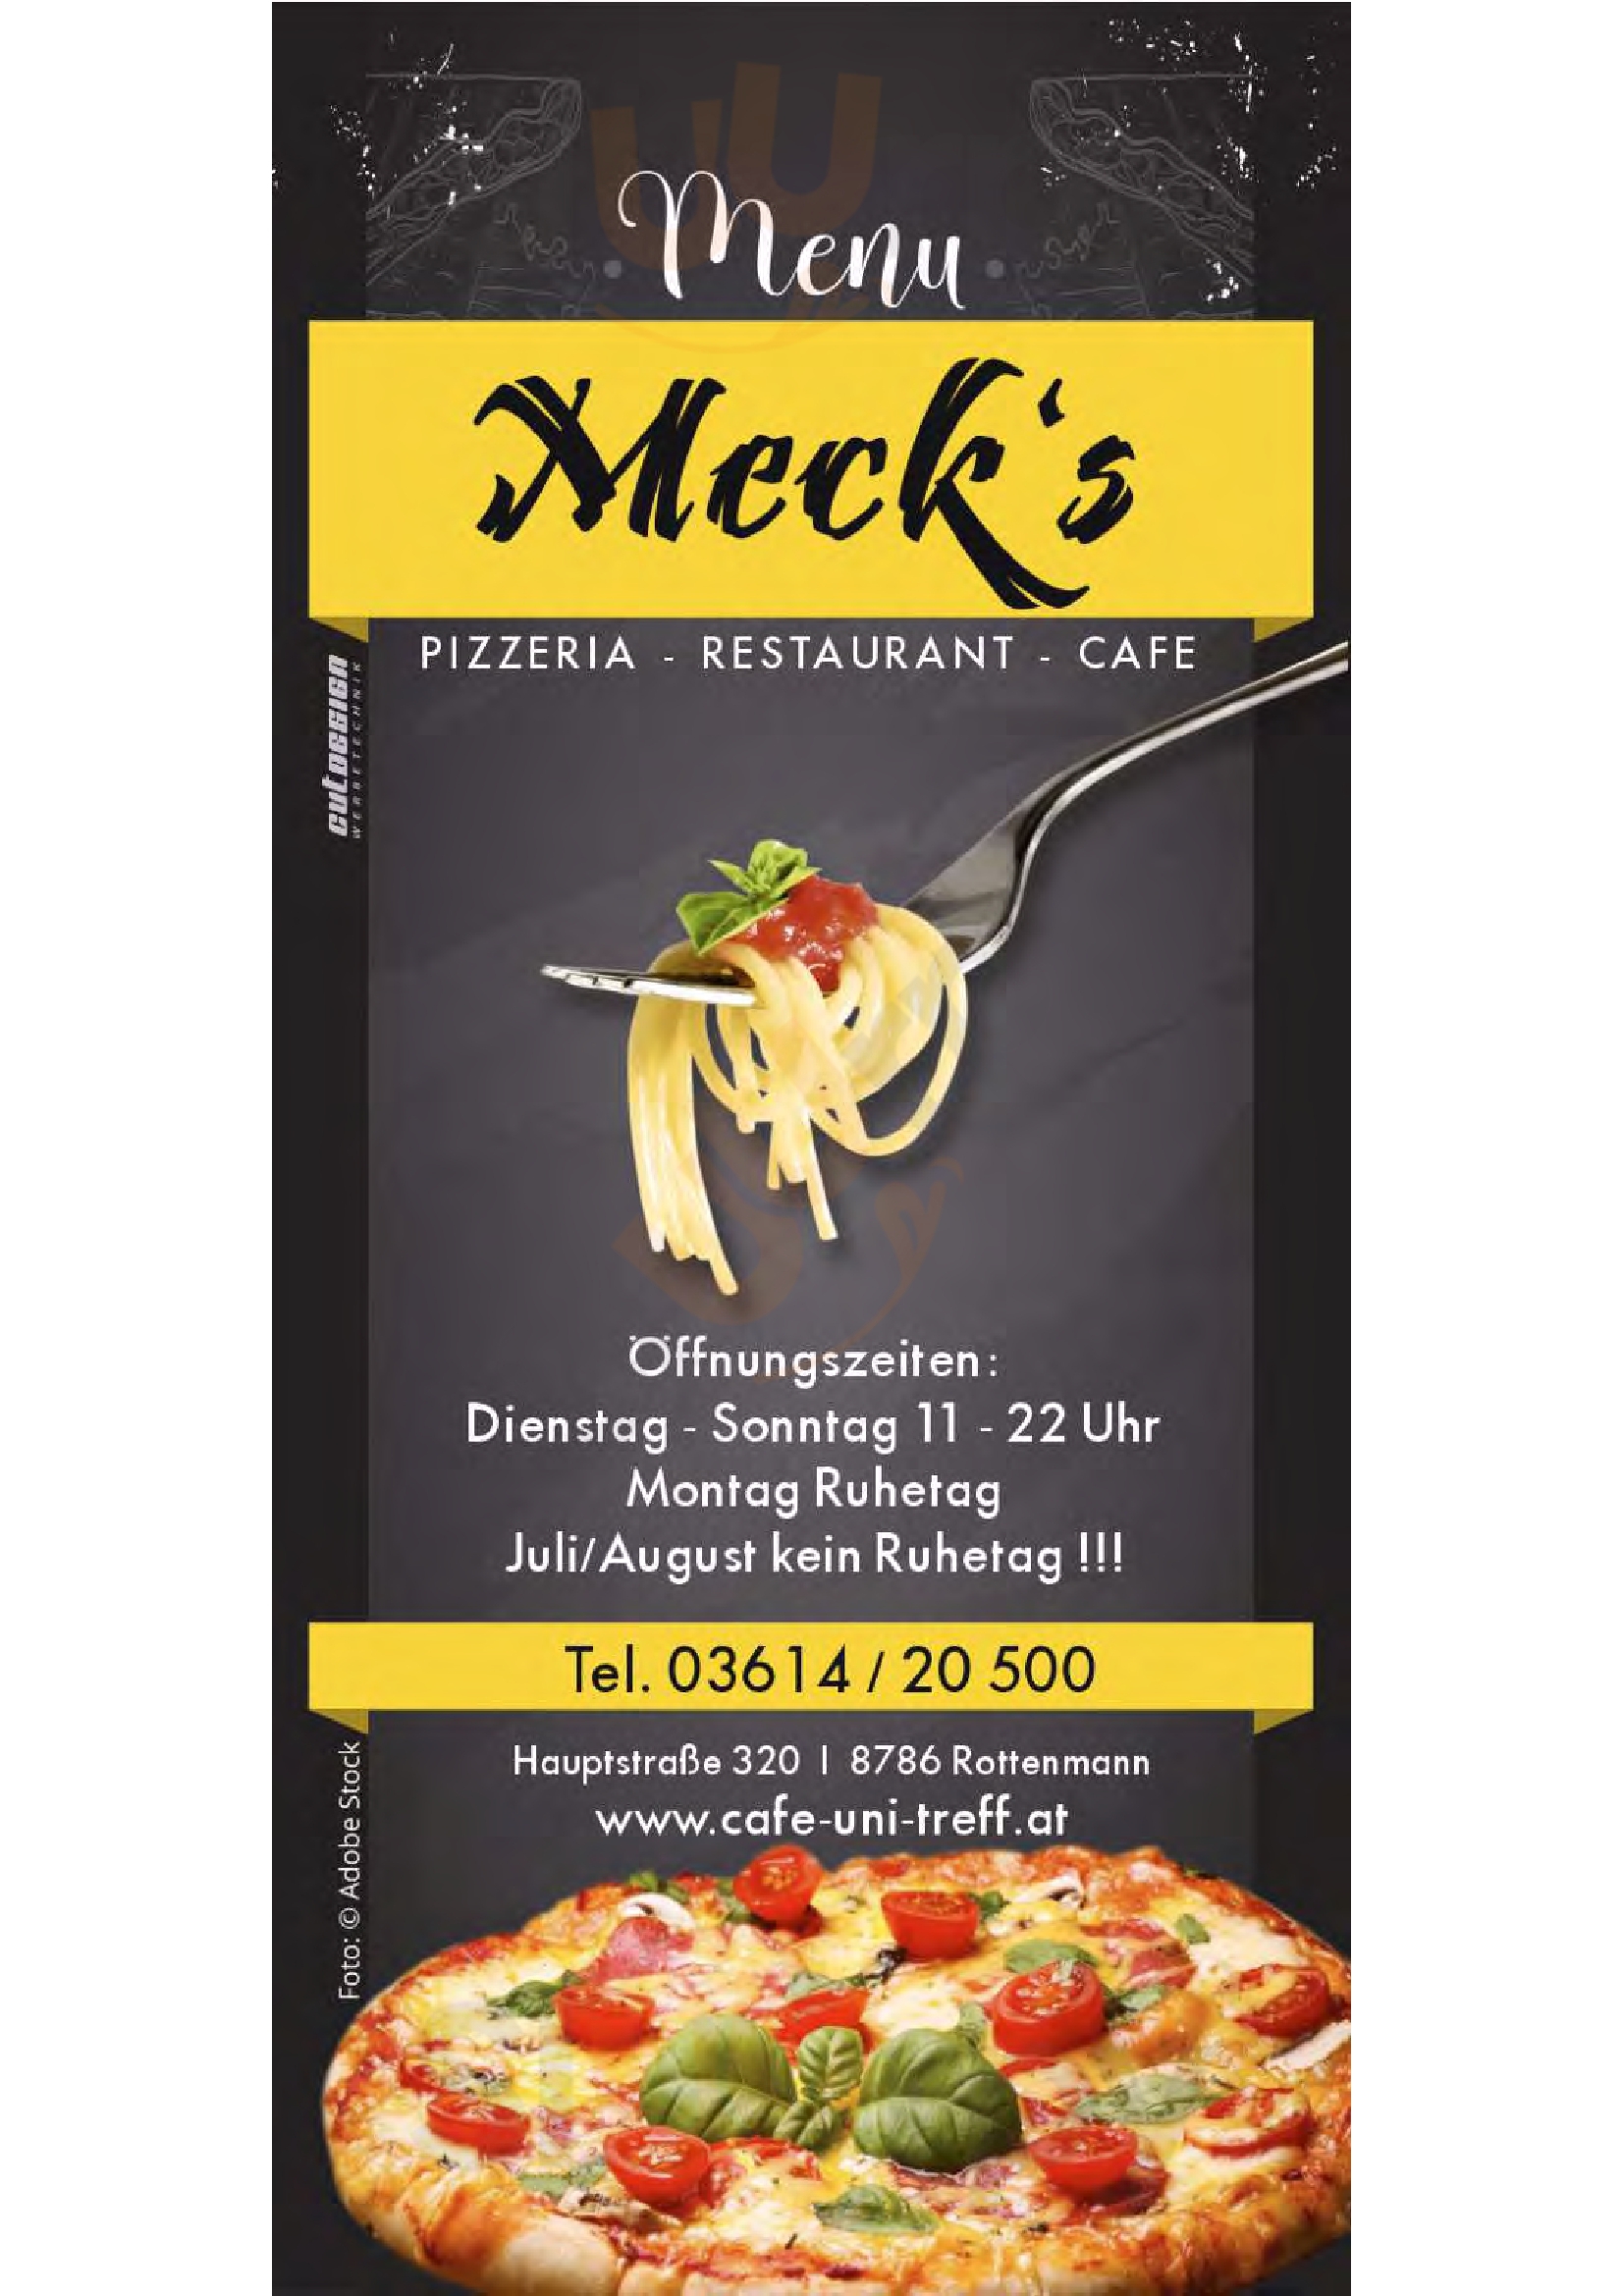 Meck's Pizzeria-restaurant-cafe Rottenmann Menu - 1